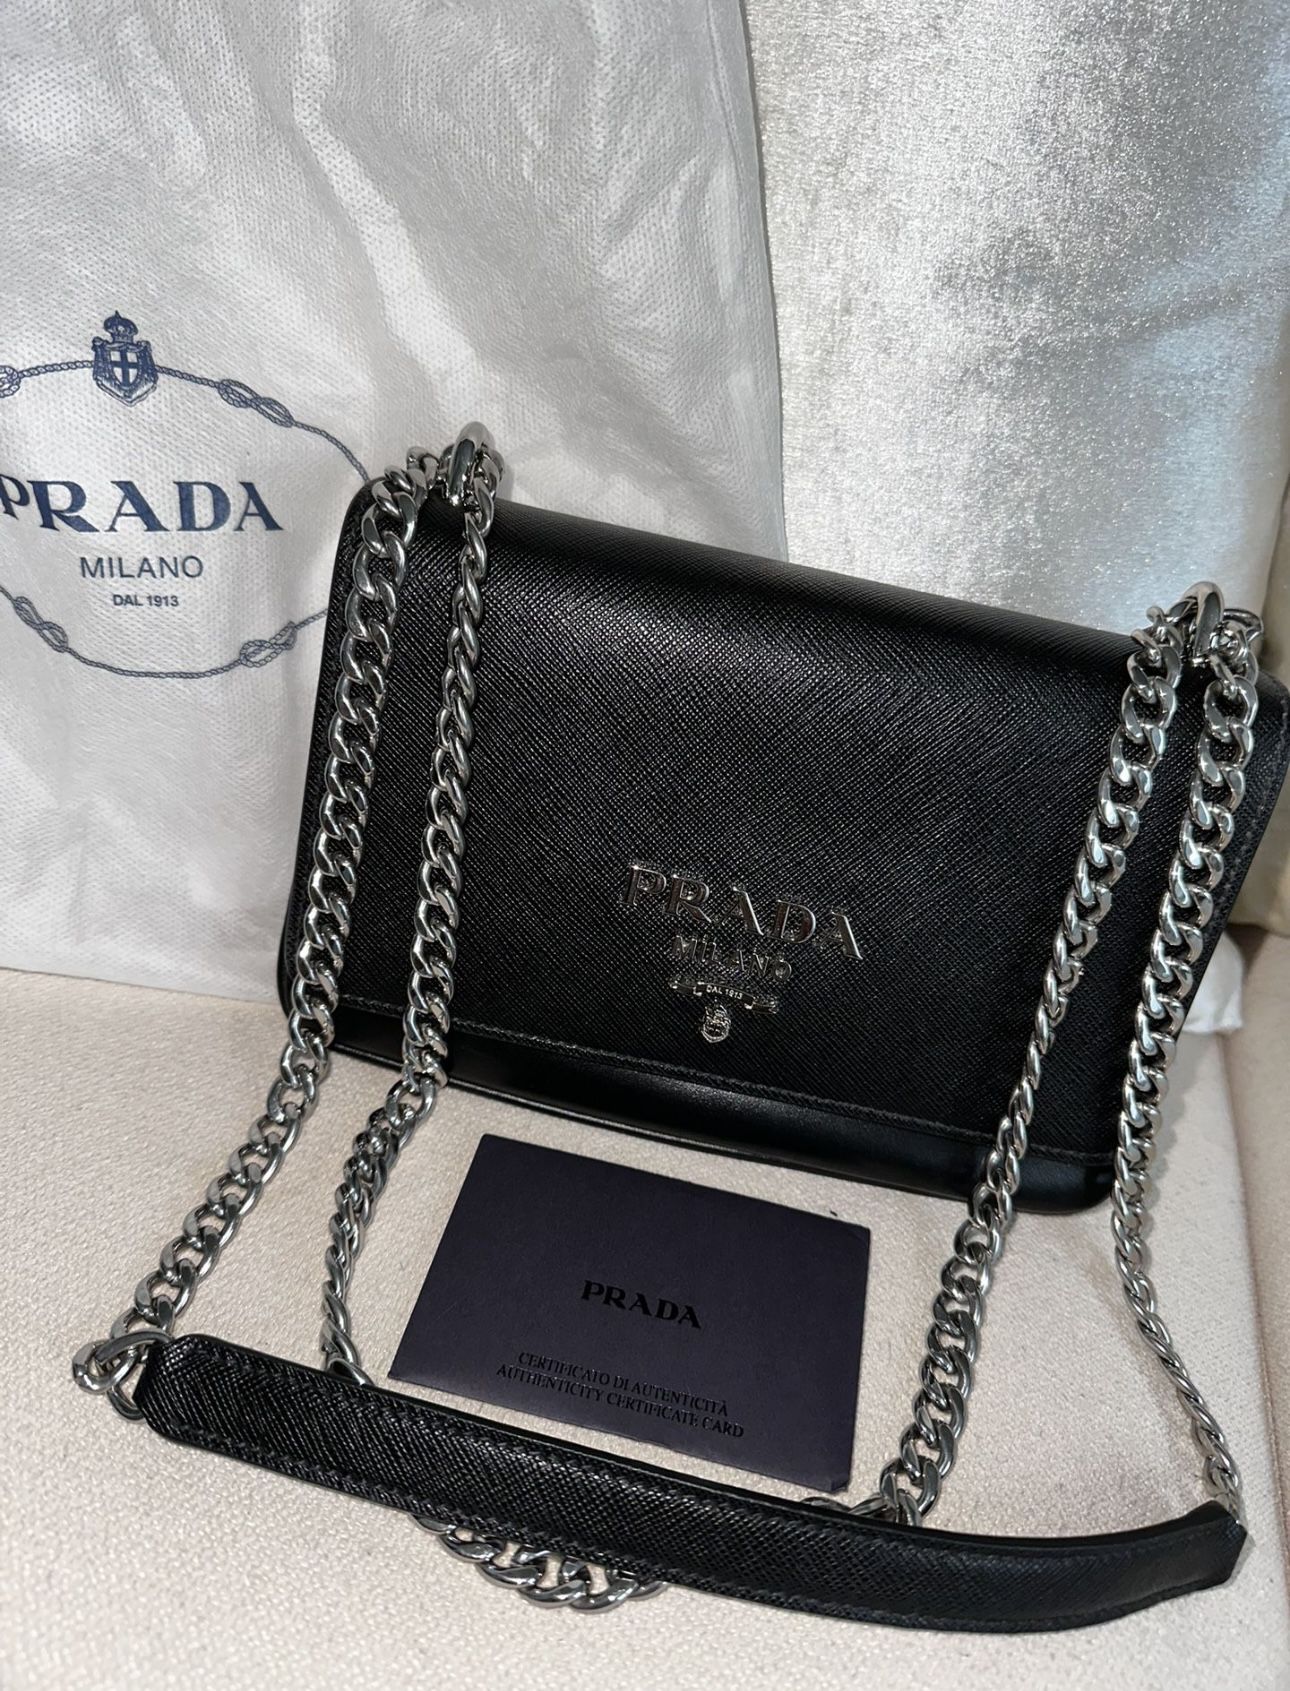 Prada Envelope Saffiano bag for Sale in West Hollywood, CA - OfferUp